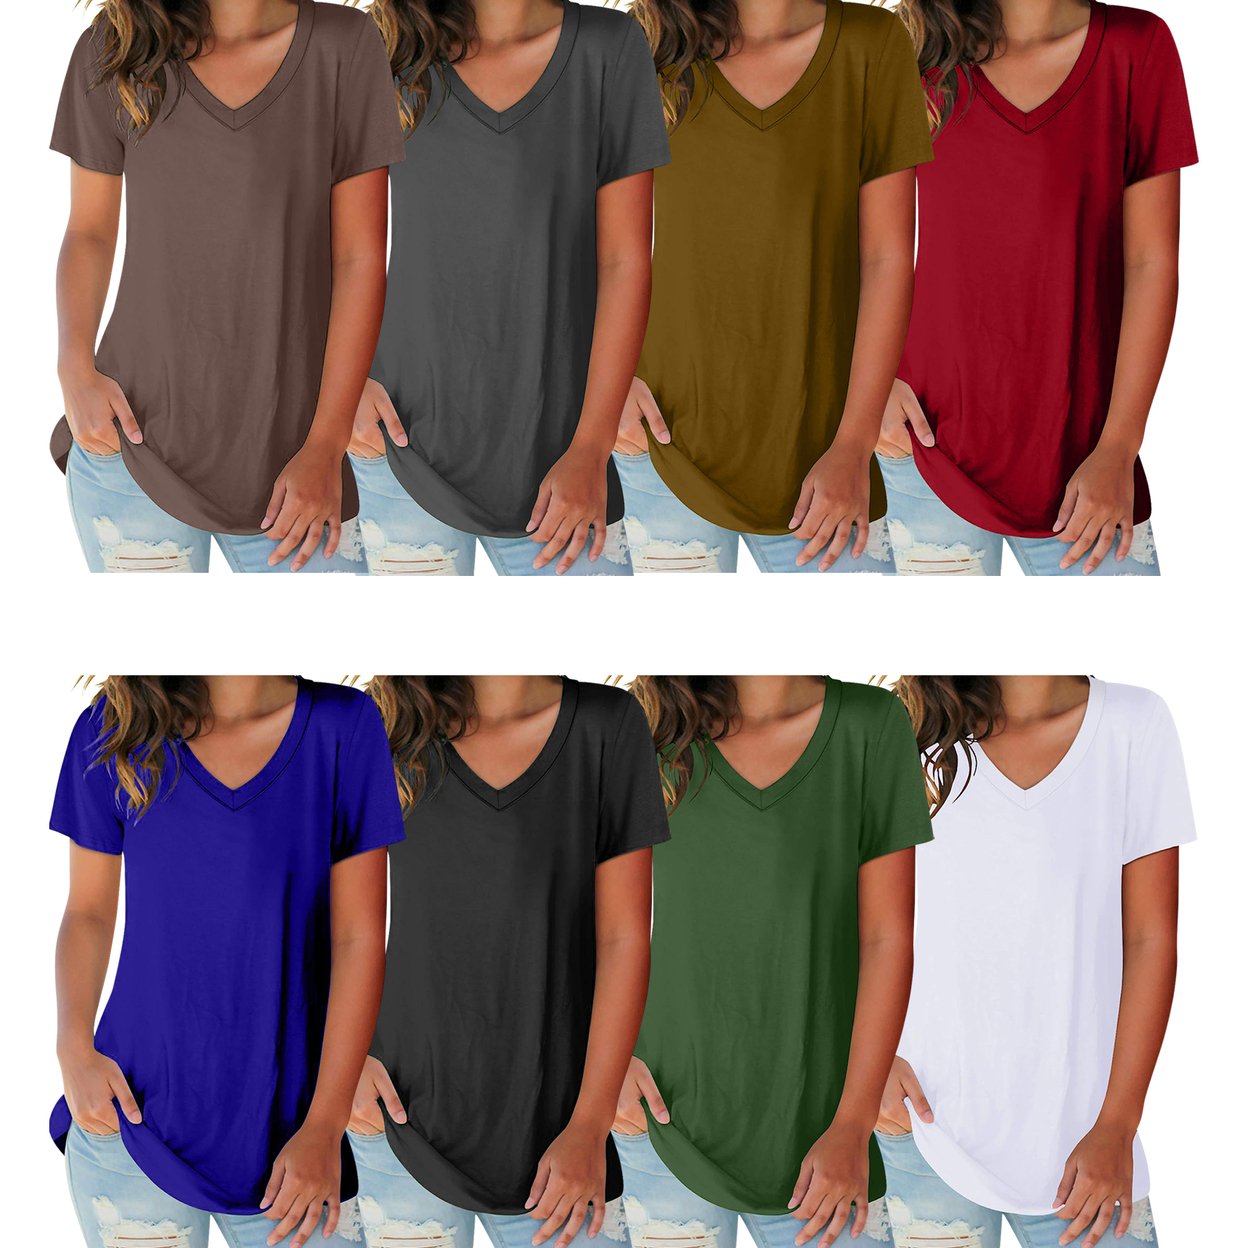 2-Pack: Women's Ultra Soft Smooth Cotton Blend Basic V-Neck Short Sleeve Shirts - Black & Green, Xx-large